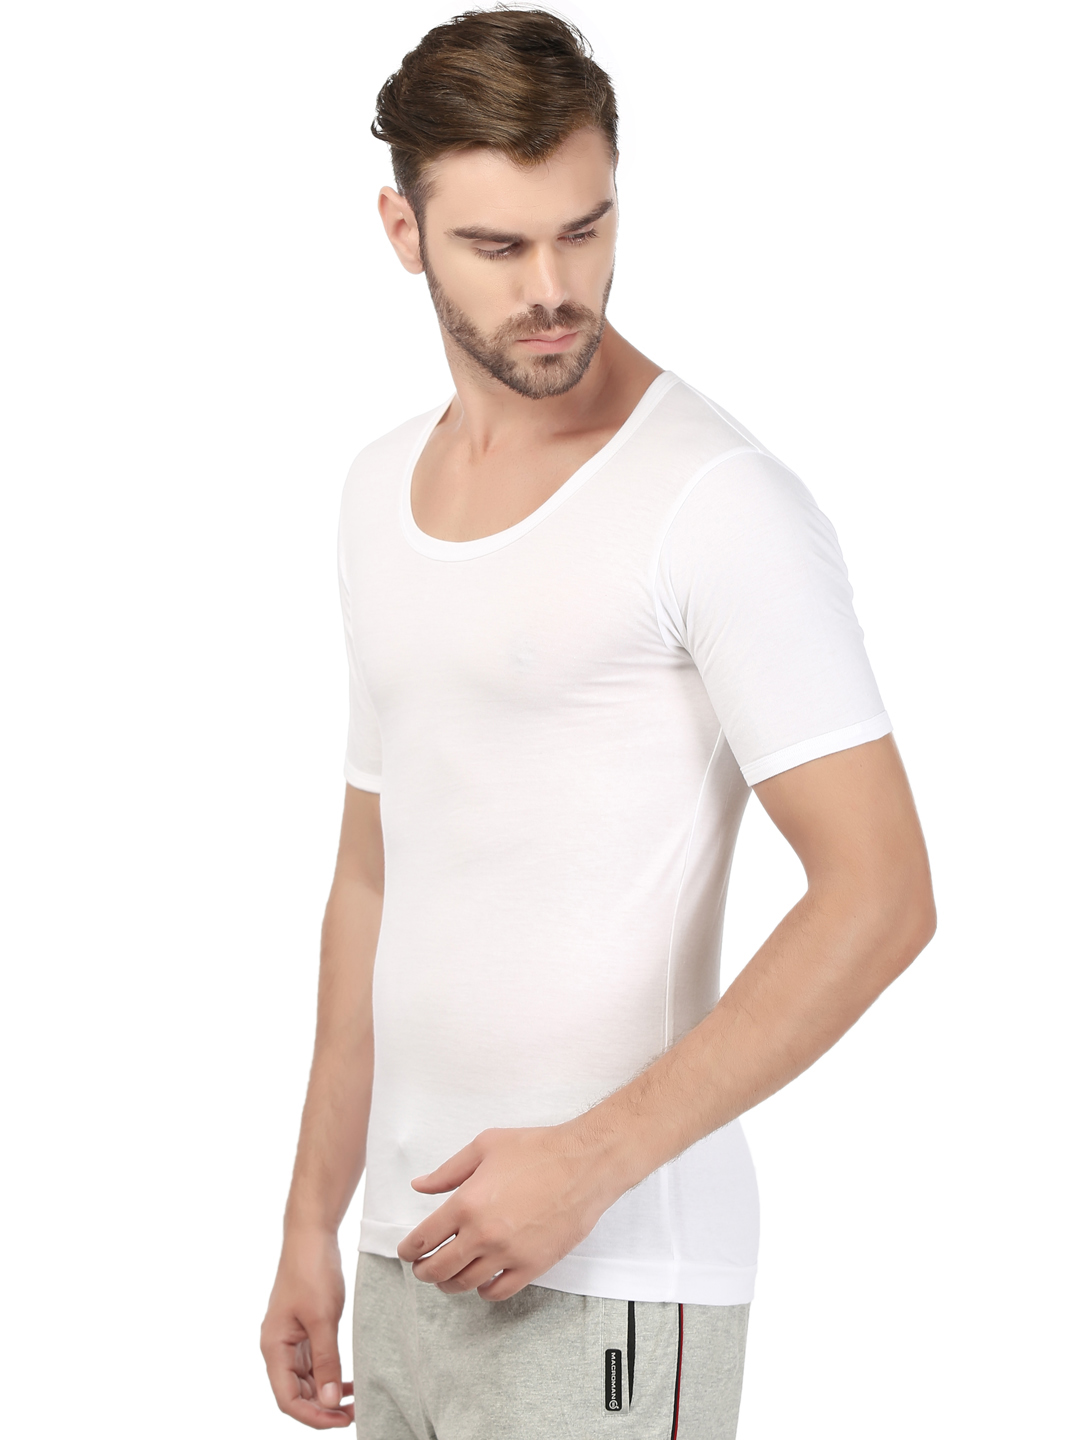 Buy Macroman Men'S White Vests Online @ ₹678 from ShopClues